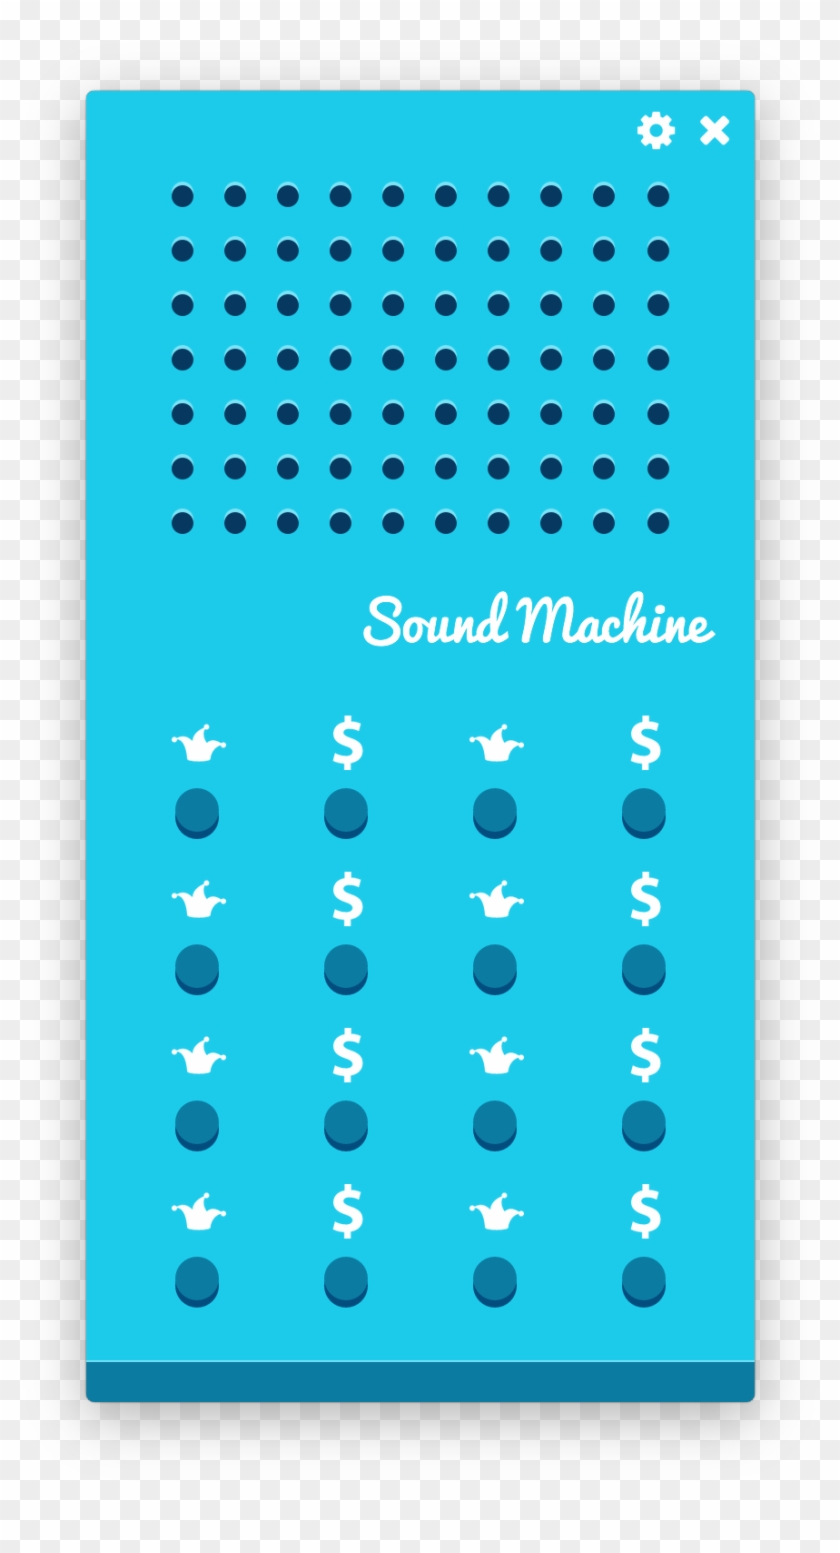 A Working Sound Machine - Stockholm Clipart #829383